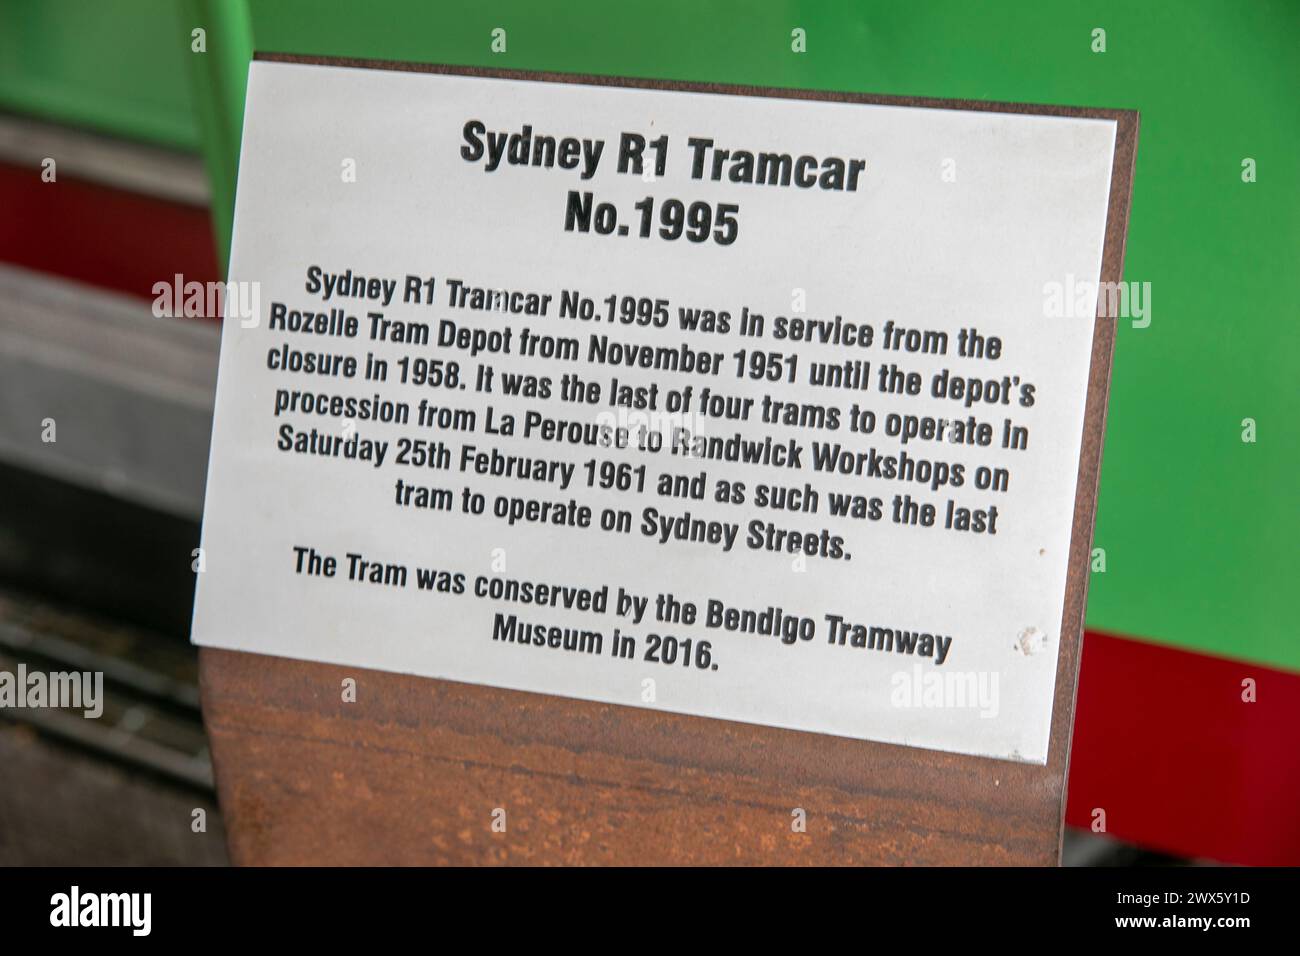 Tramsheds in Forest Lodge Glebe, Sydney R1 tramcar no 1995, the last tram on Sydney streets is restored and displayed inside the tramsheds, Australia Stock Photo